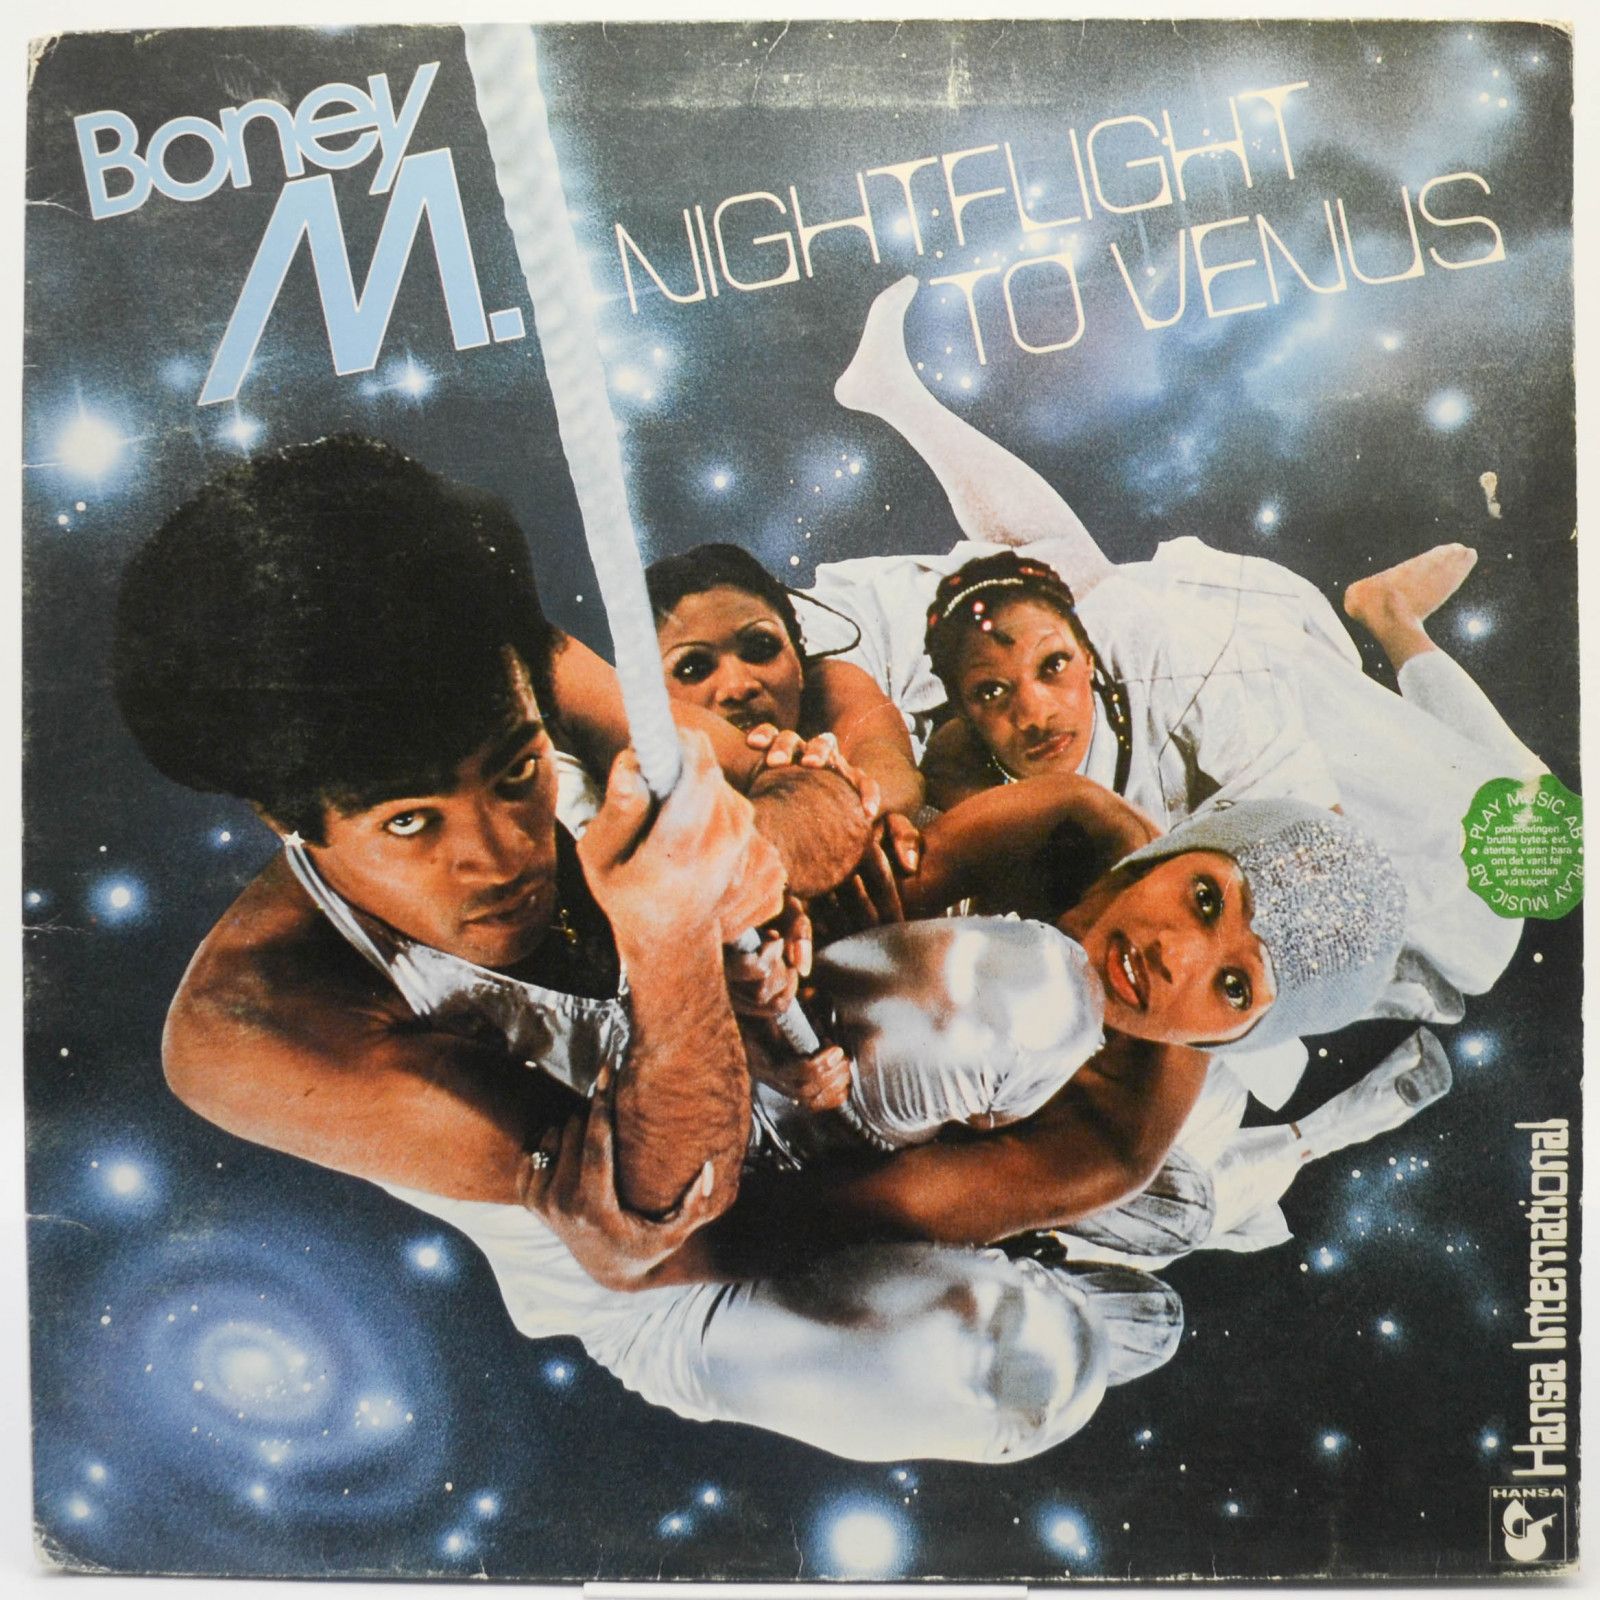 Boney M. — Nightflight To Venus, 1978